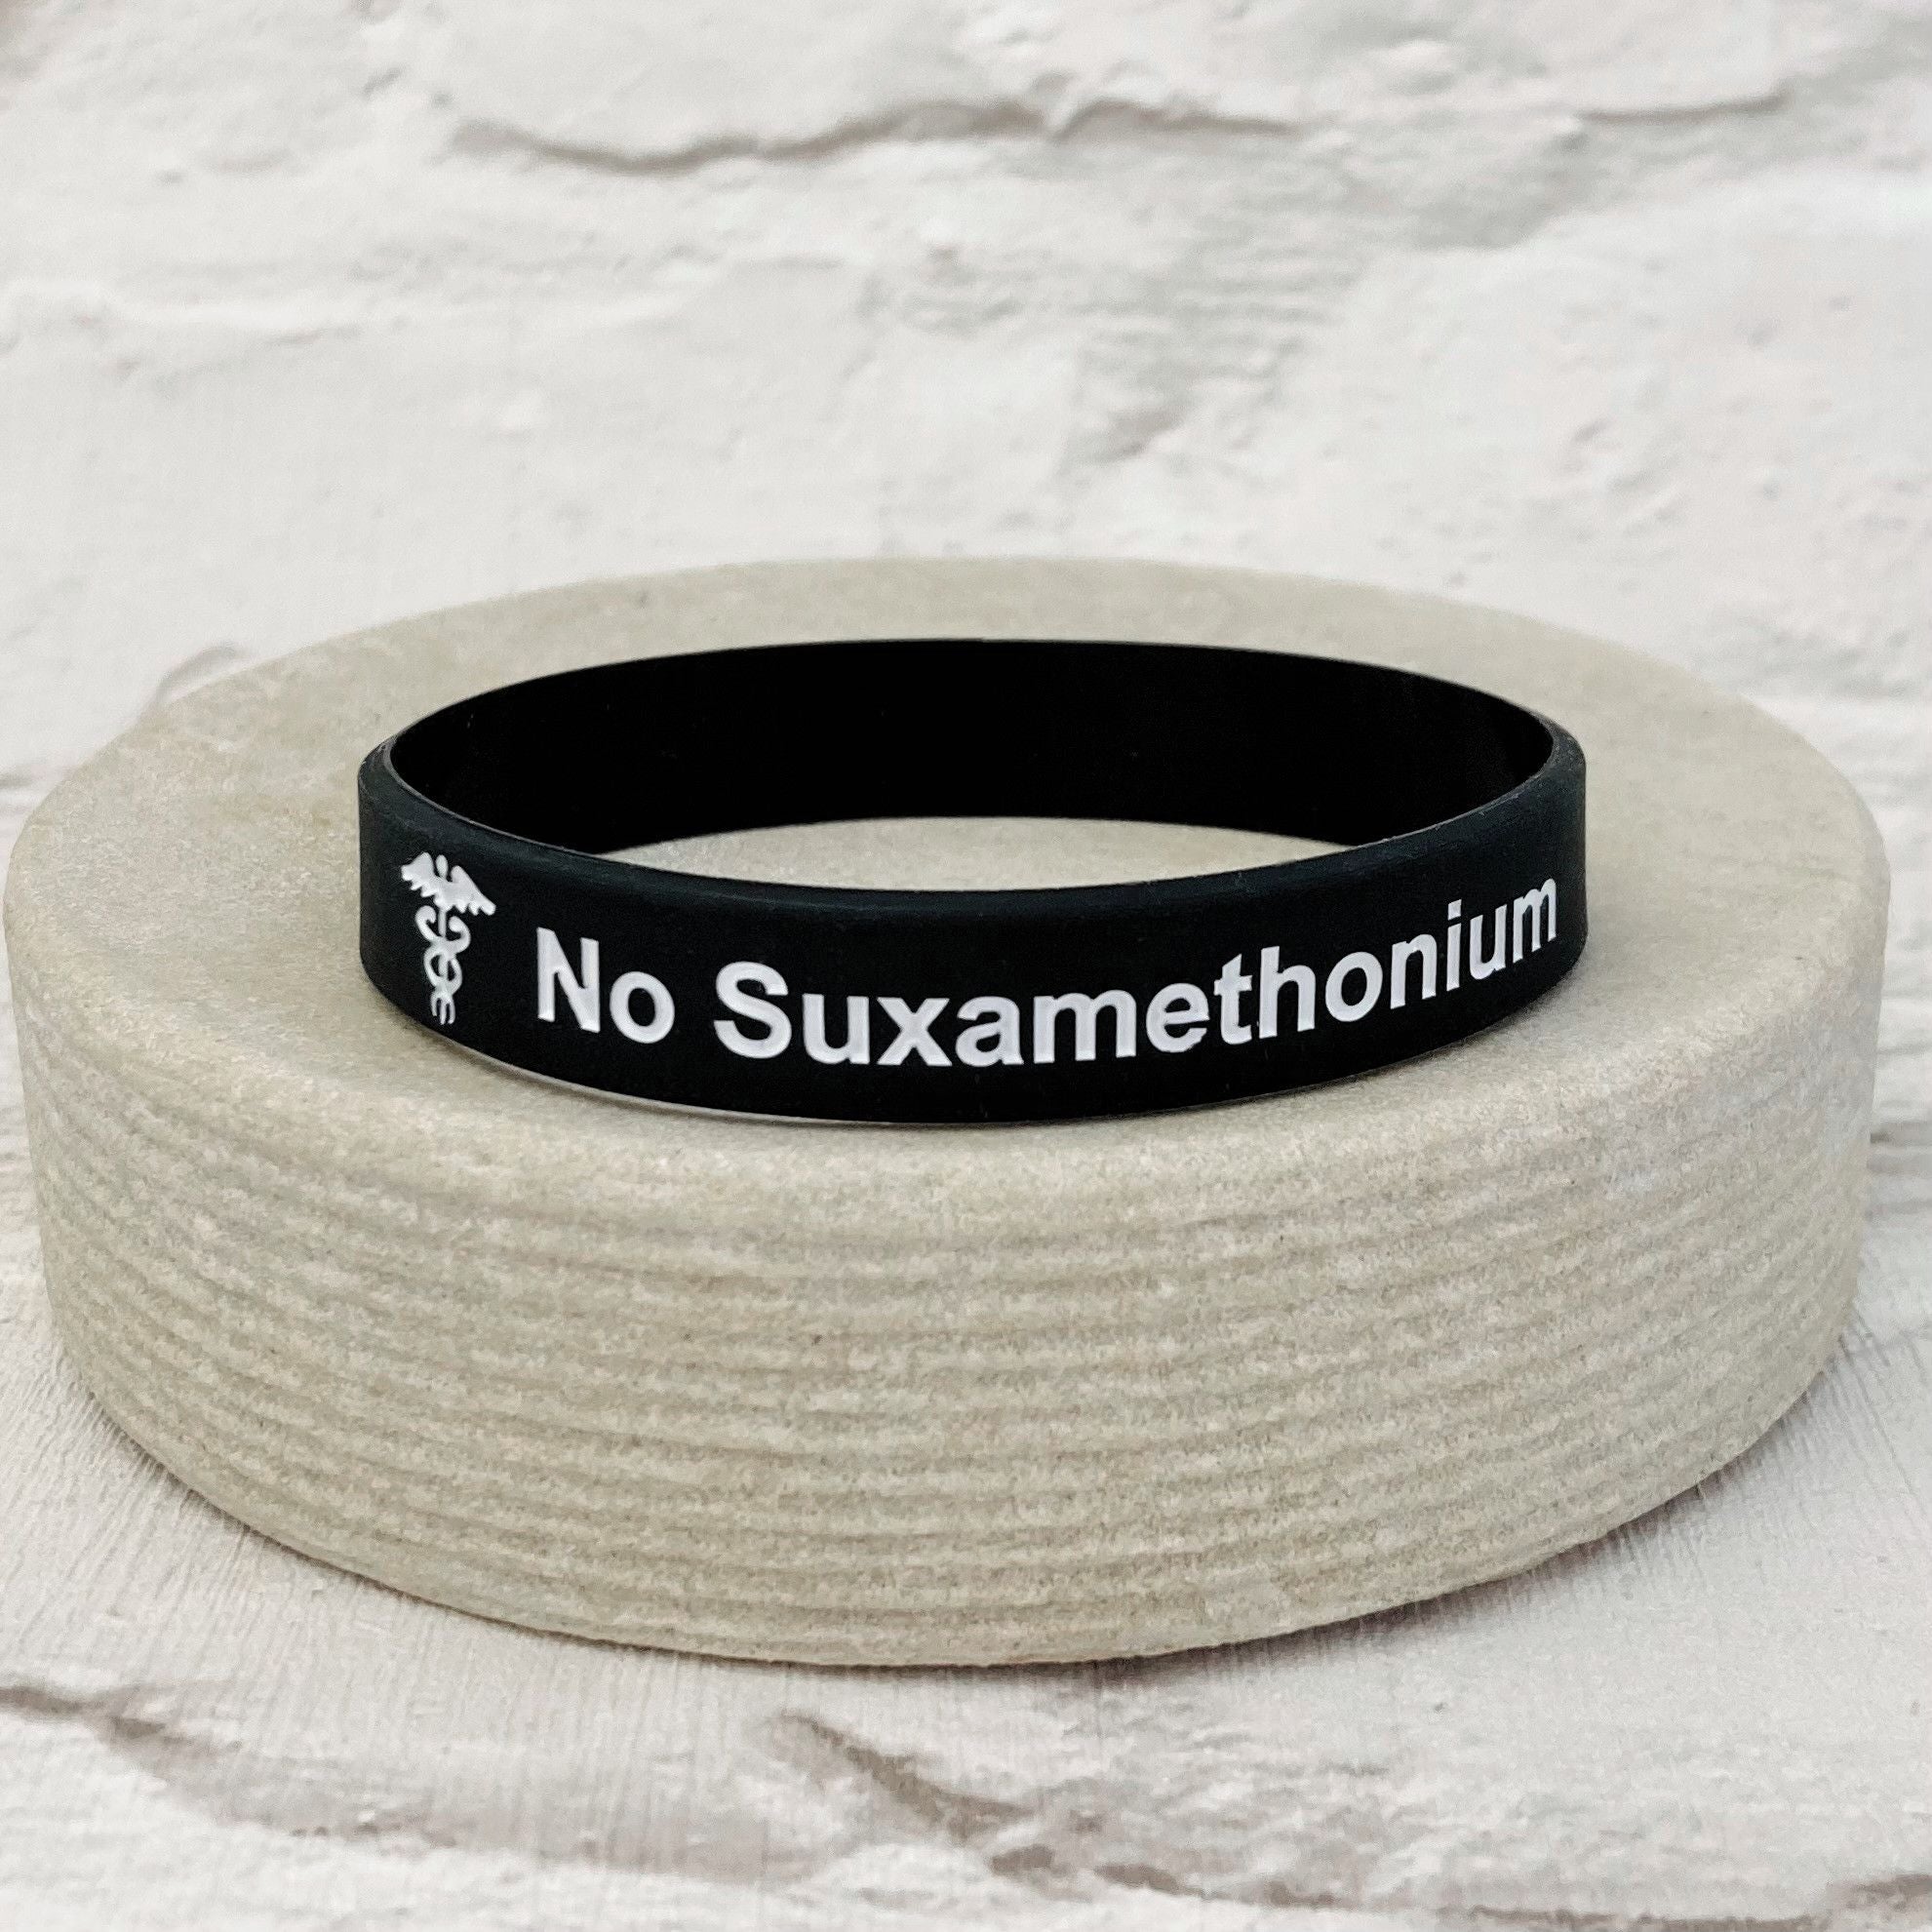 no suxamethonium medical bands id emergency